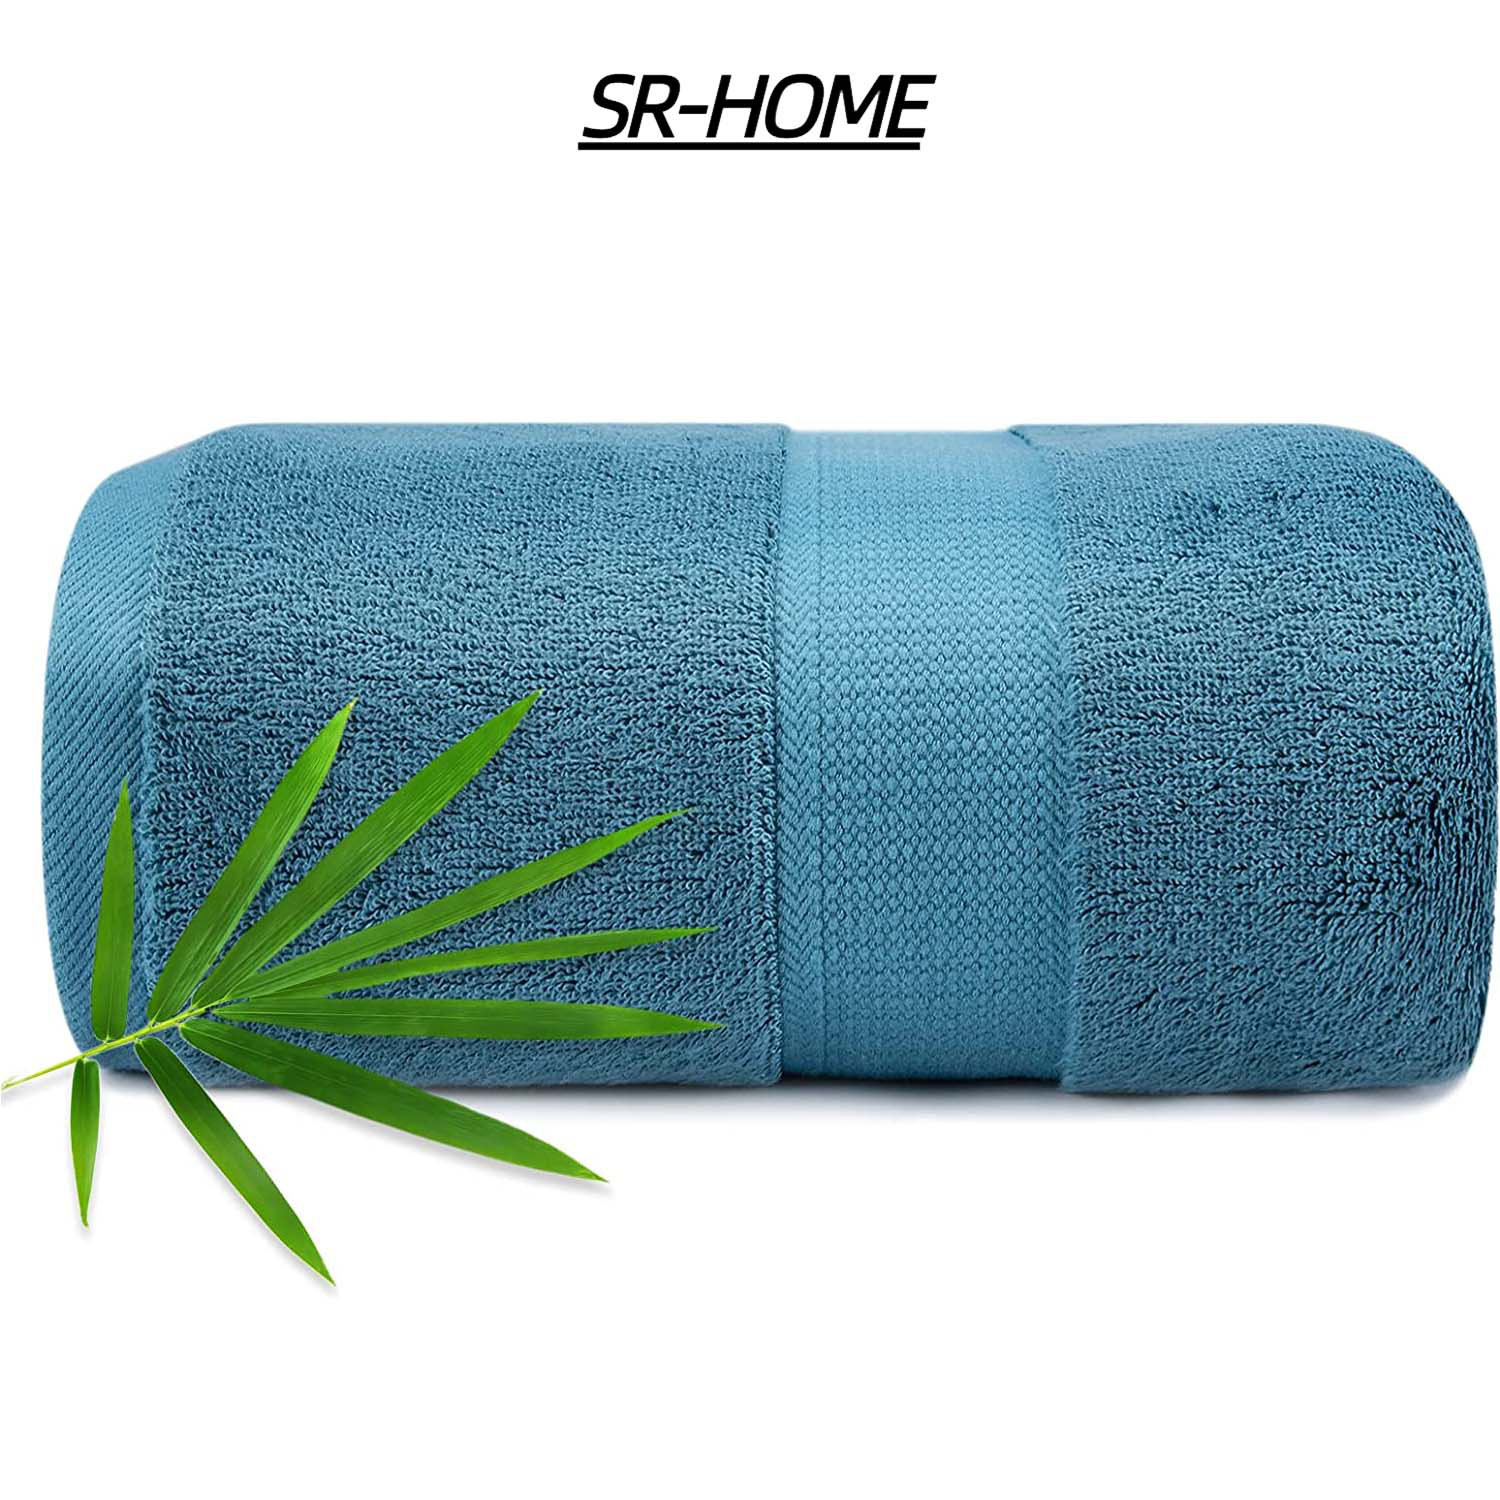 SR-HOME Premium Rayon From Bamboo Bath Towel